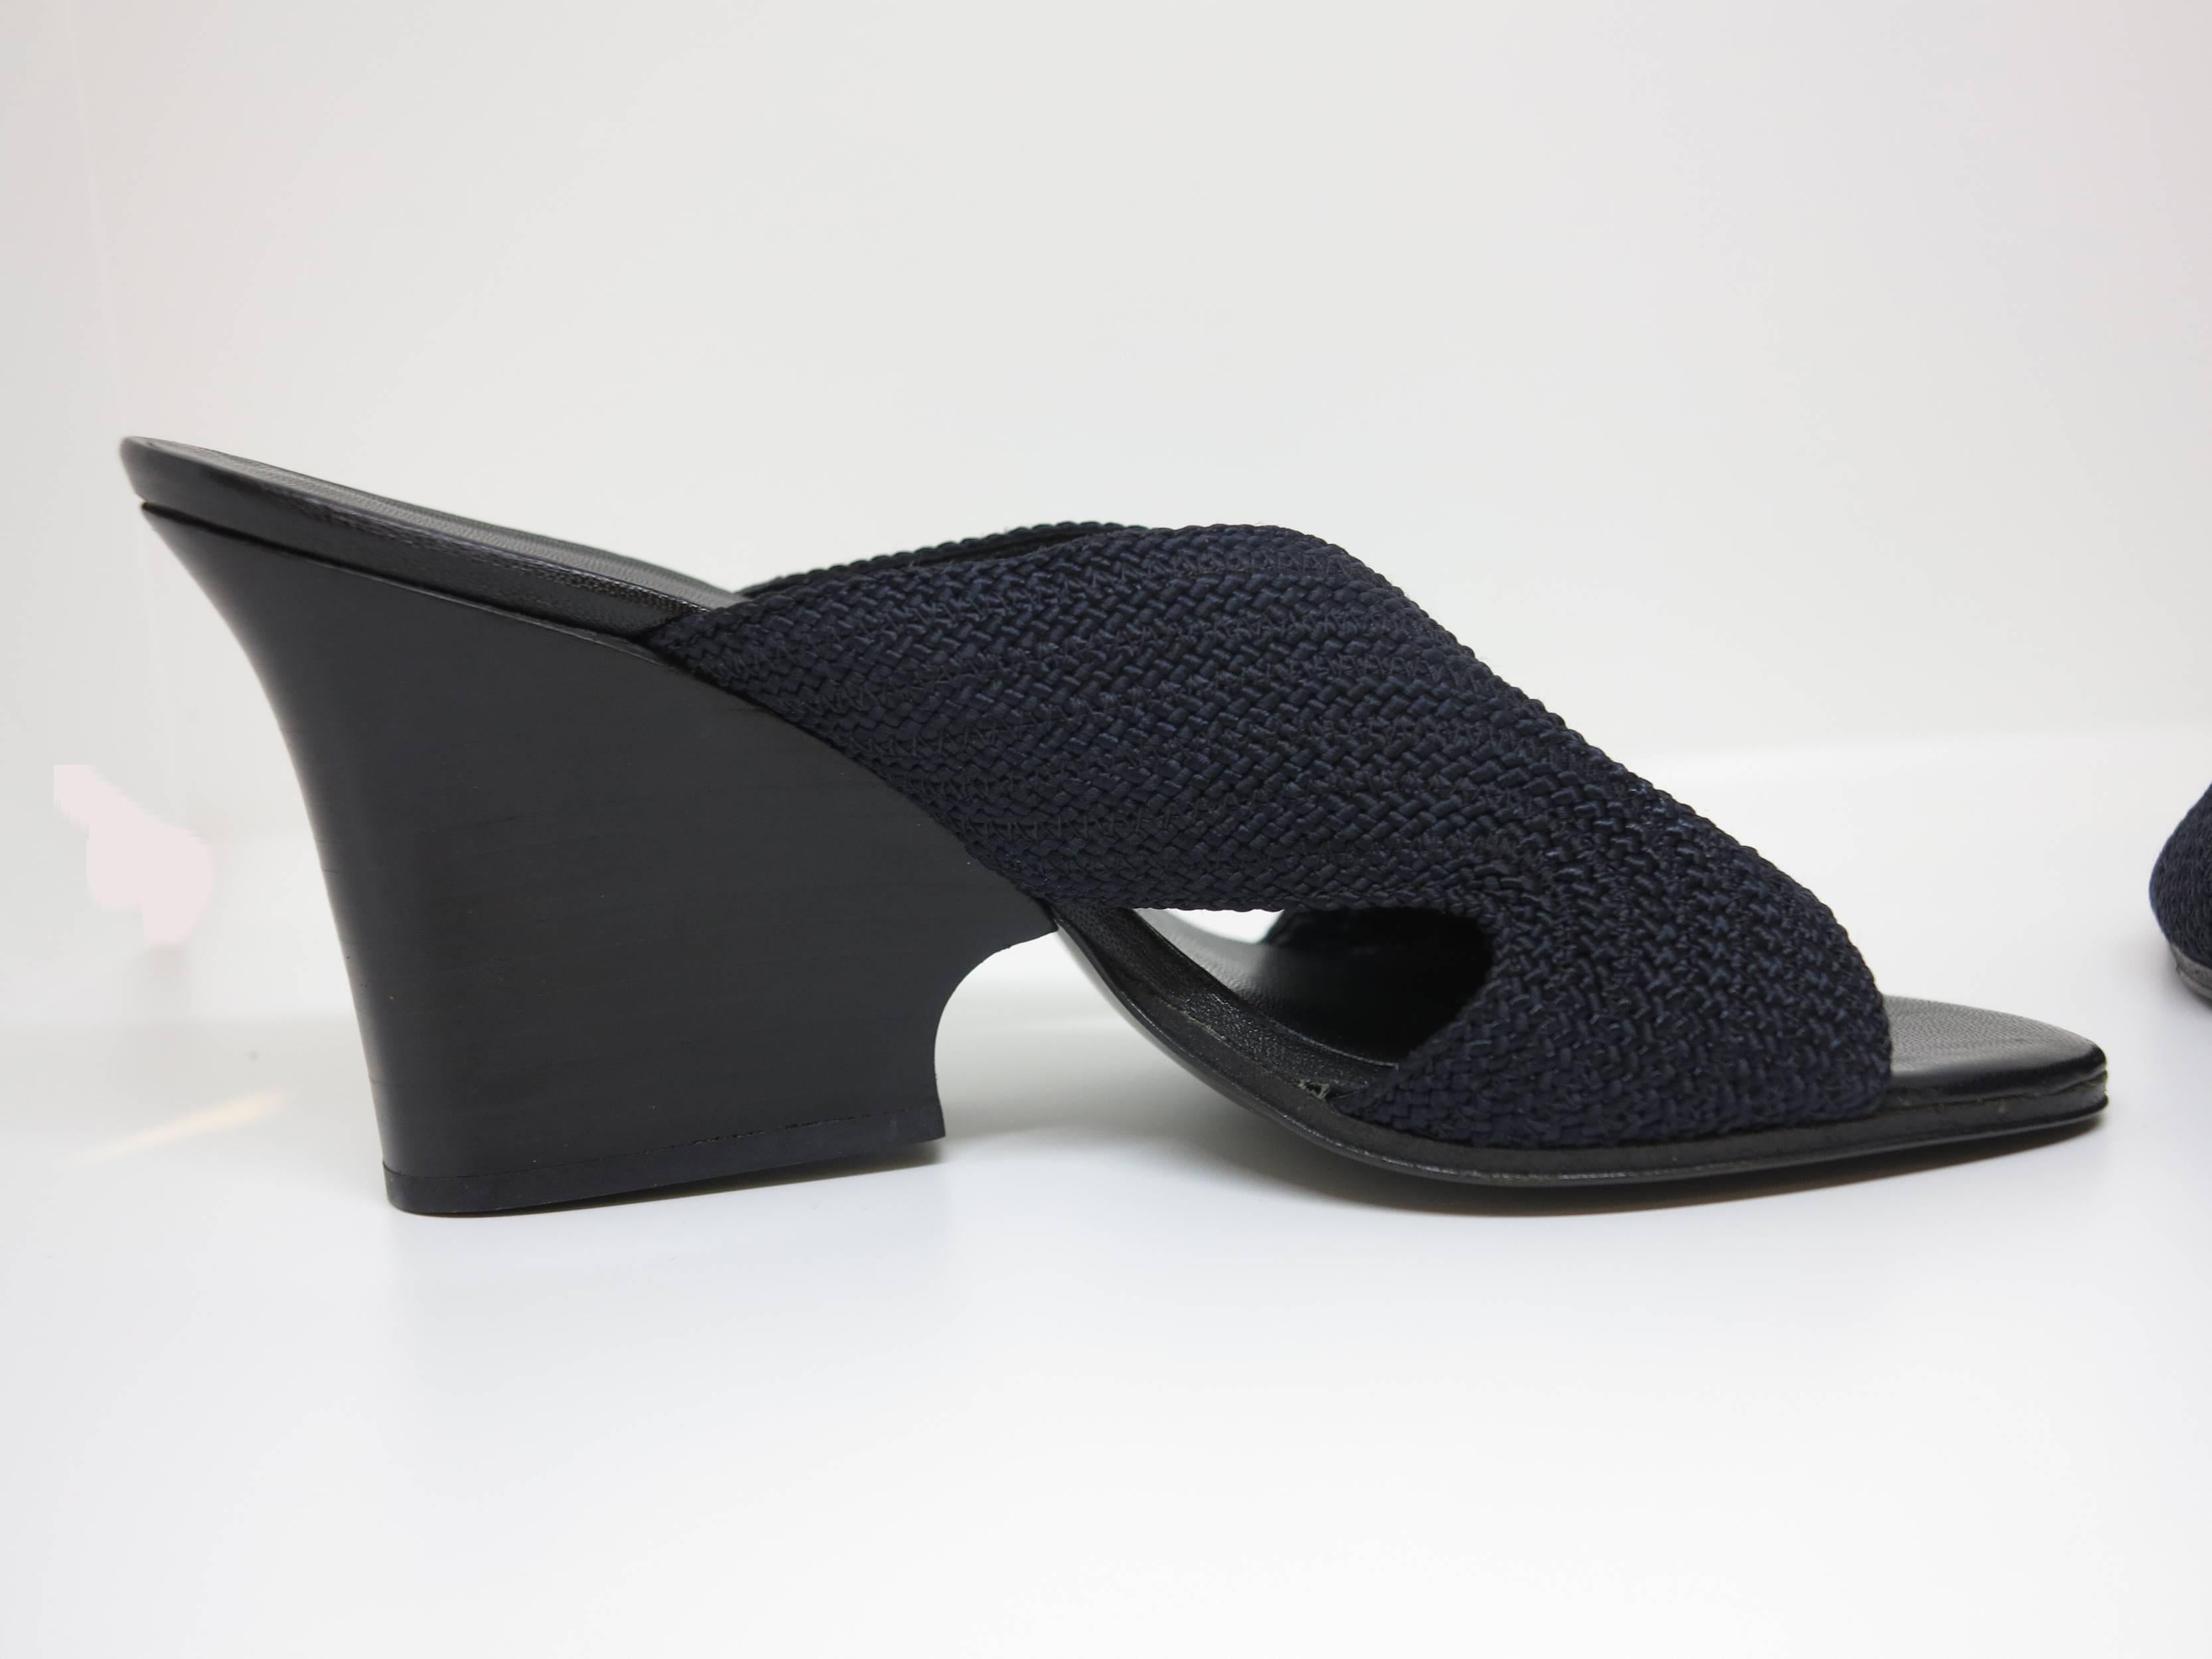 Yves Saint Laurent black woven cord open toe leather lined broken wedge heel mules unworn 7B...Heel is approximately 3 1/4